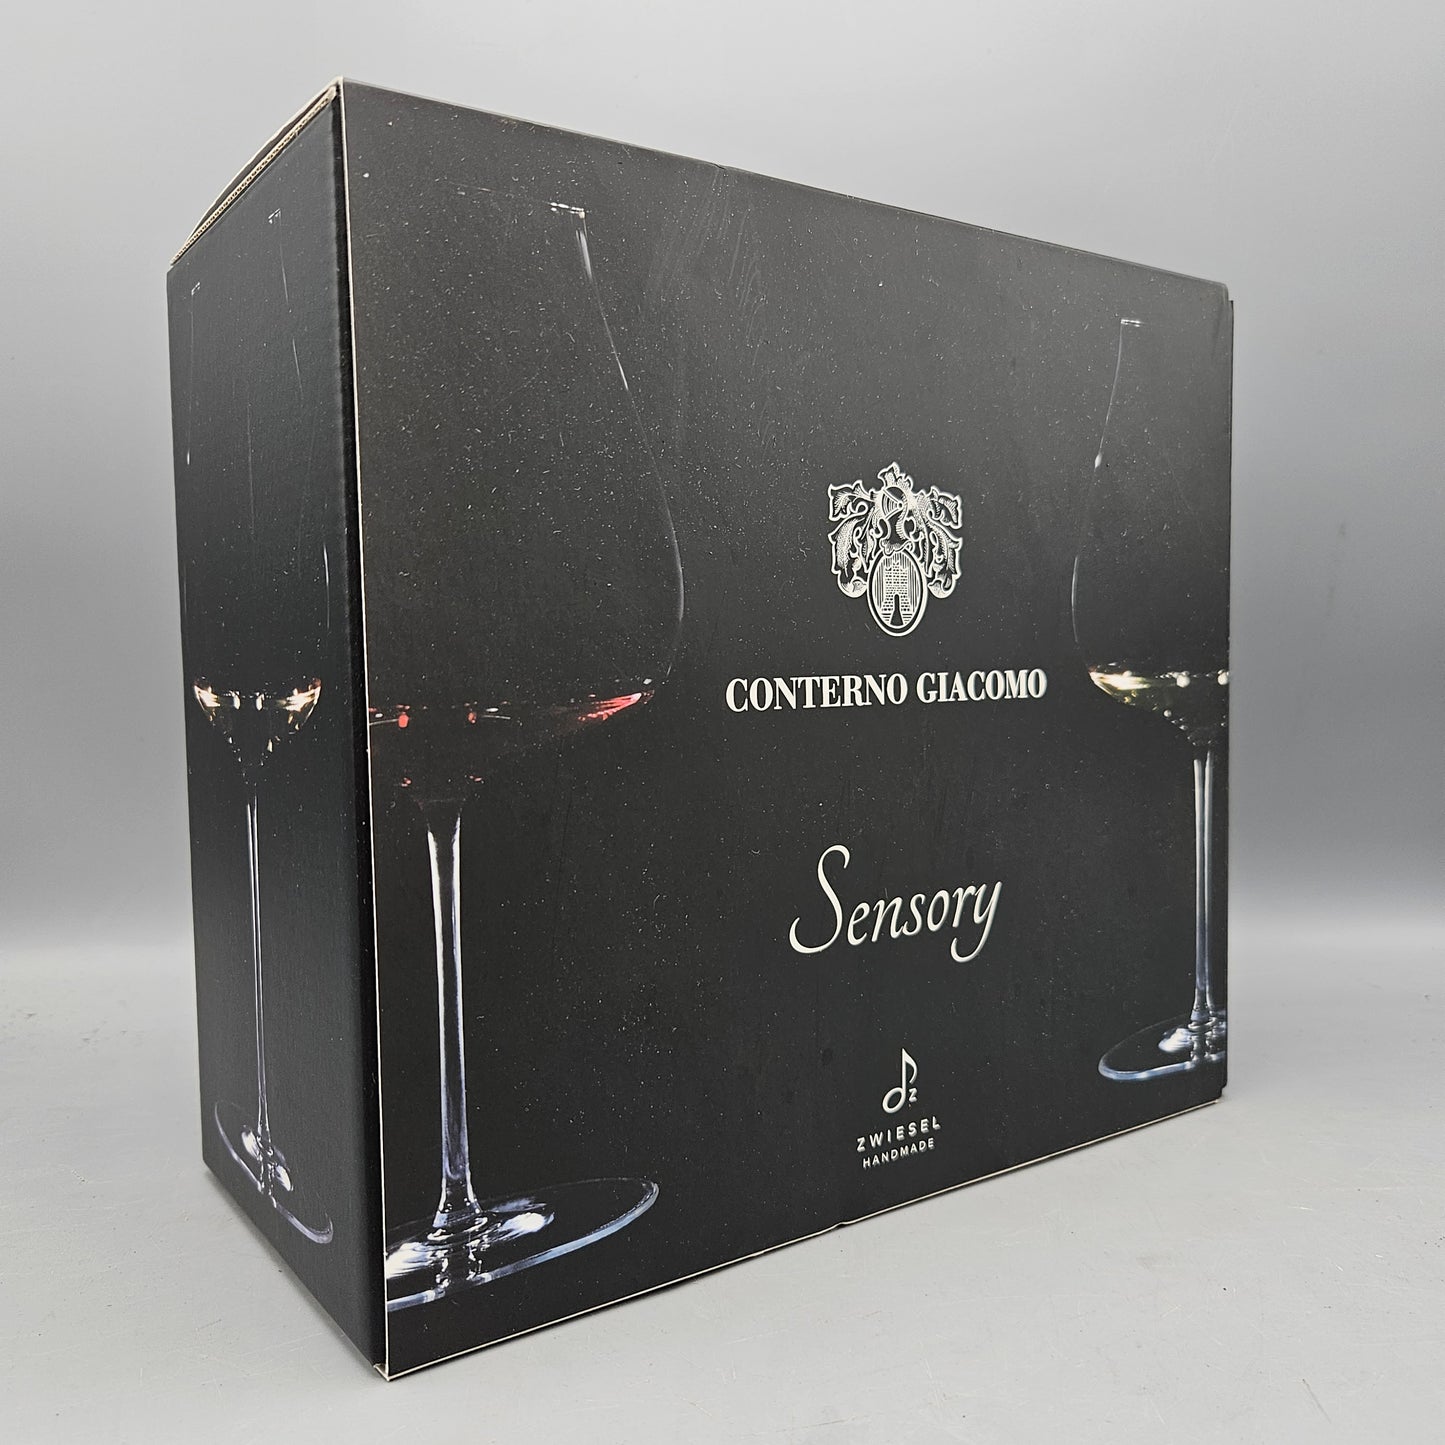 Set of 2 Conterno Giacomo Sensory Glasses in Box